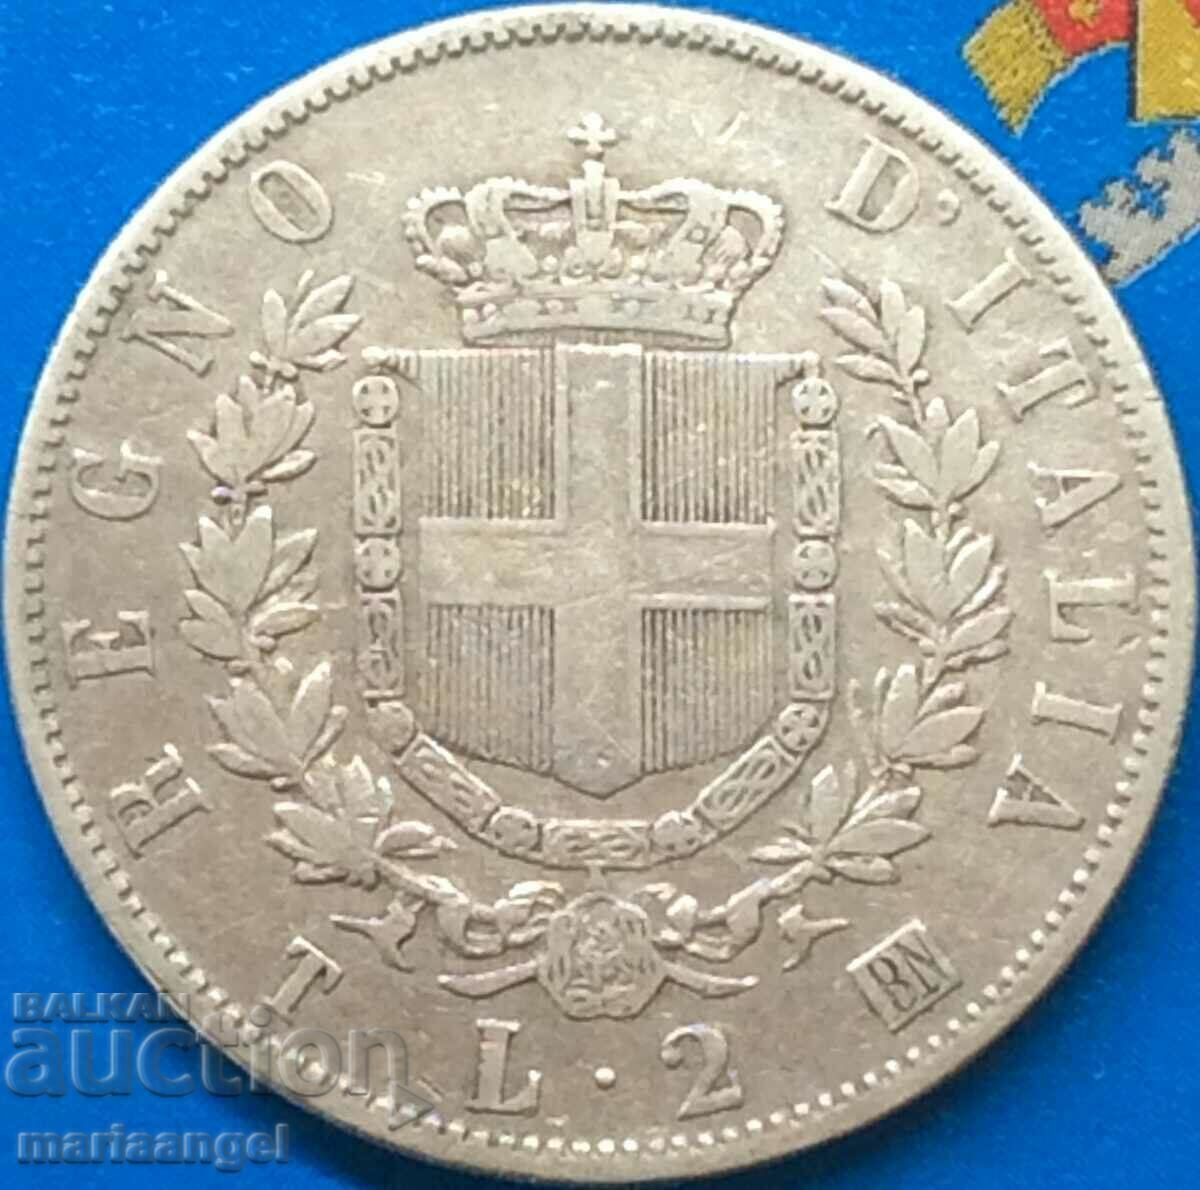 2 лири 1863 Т - Турин Италия "ЩИТ" Shield BN - Бирминхам Ag